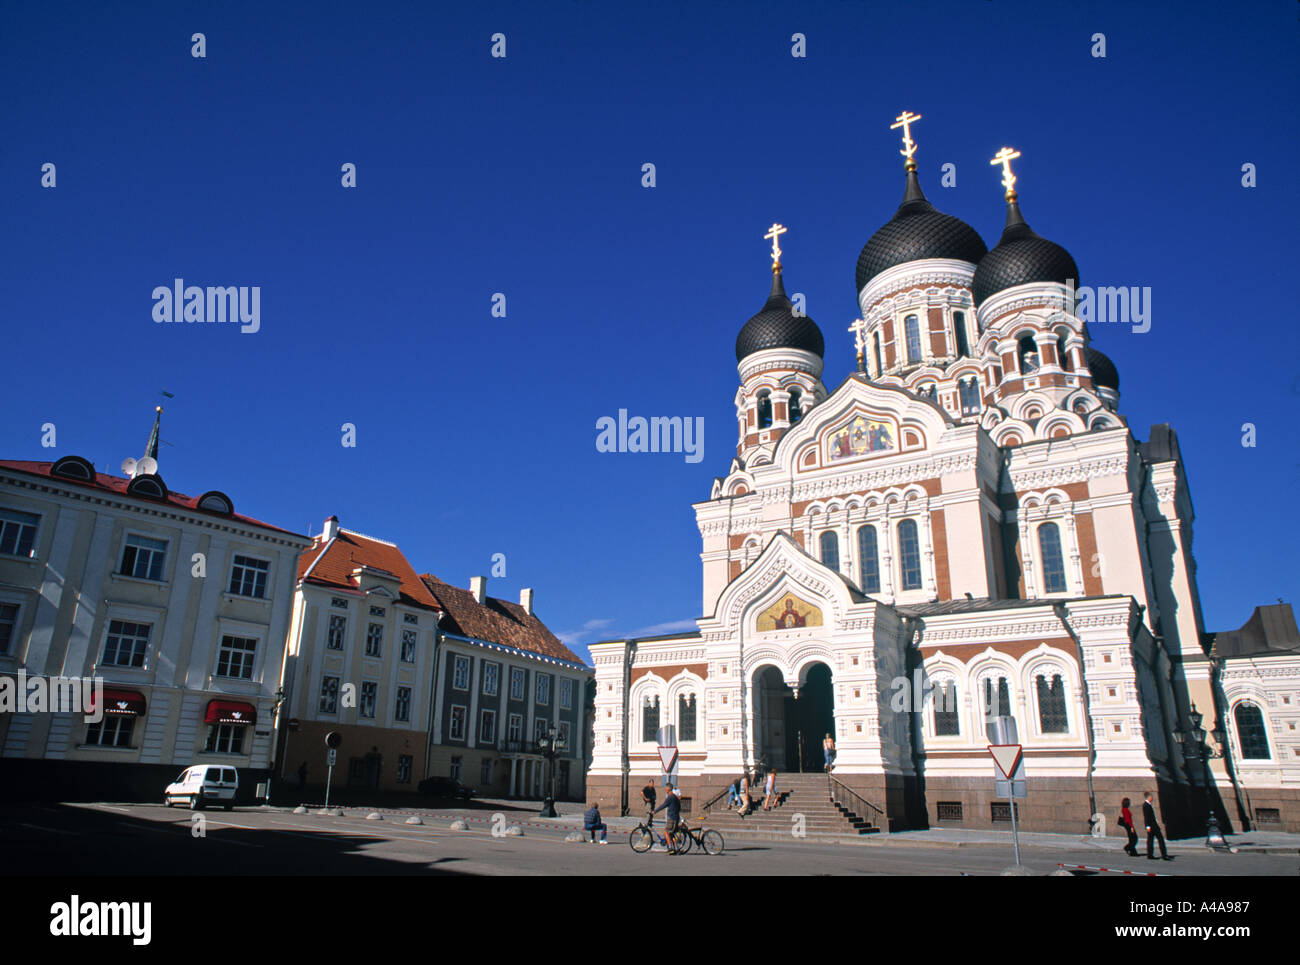 Alexandr Nevsky Cathedral, Tallinn, Estonia Stock Photo